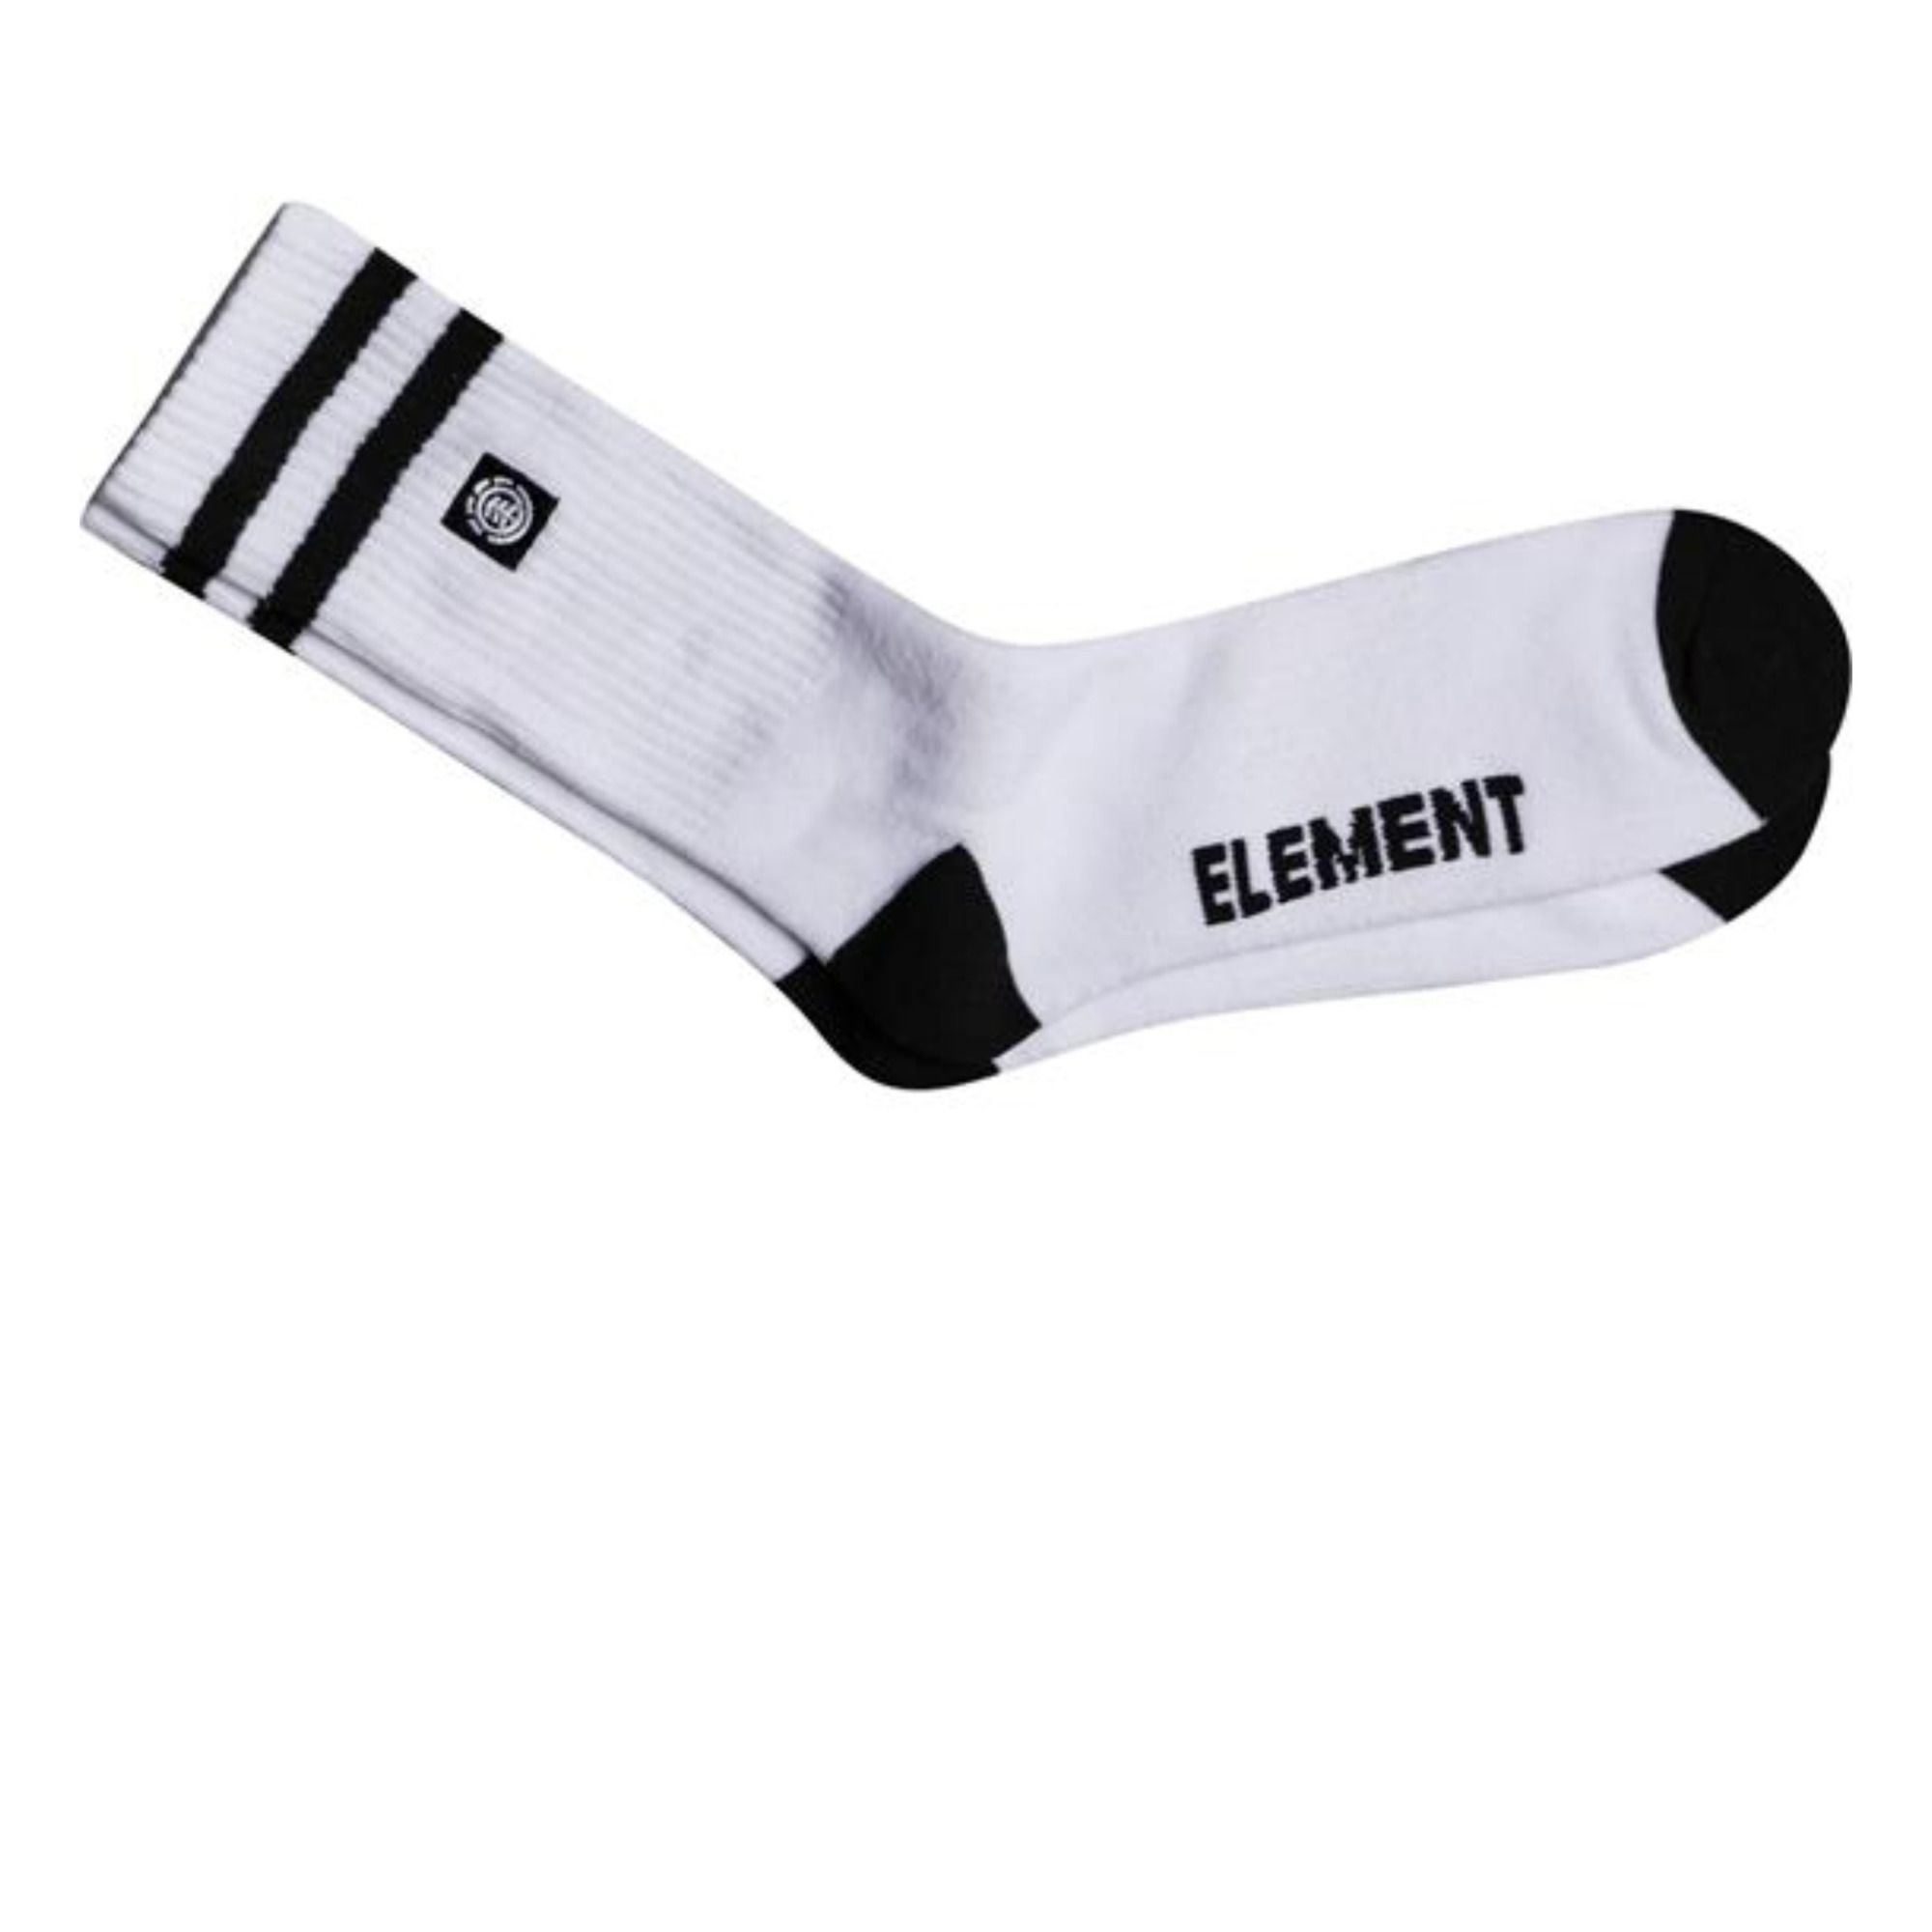 Element - Chaussettes - Collection Homme - - Homme - Blanc